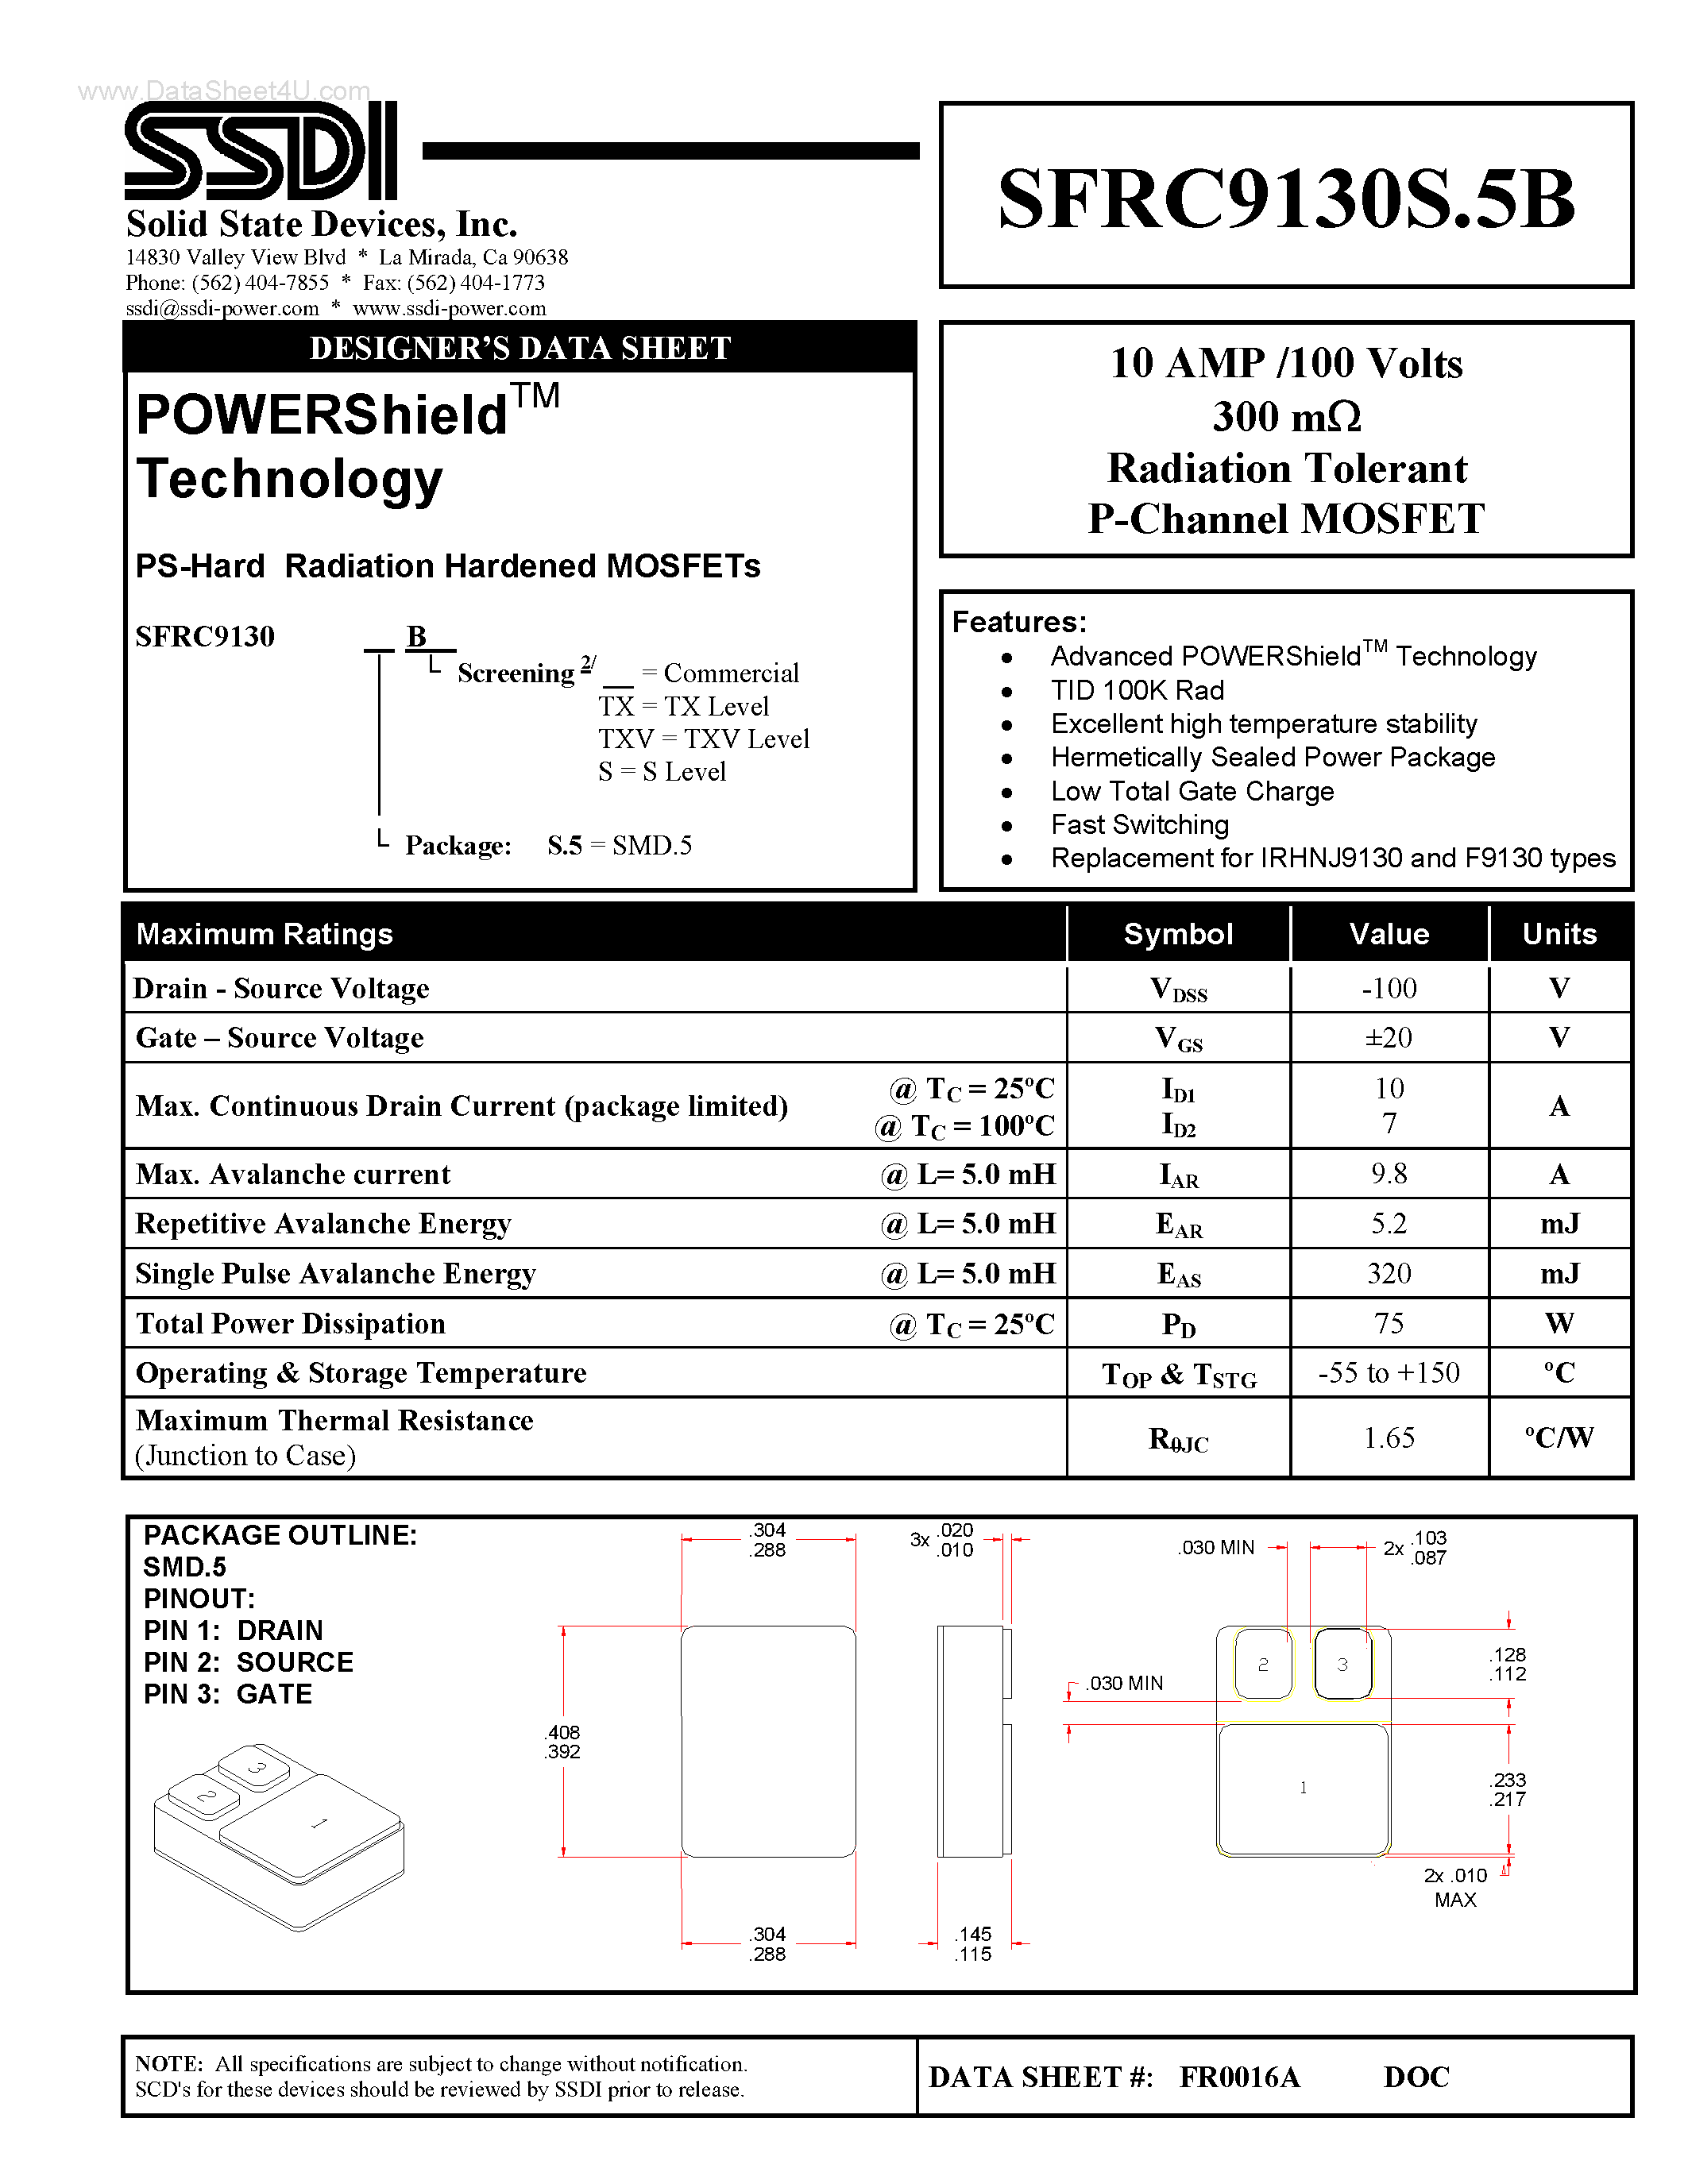 Datasheet SFRC9130S.5B - Radiation Tolerant P-Channel MOSFET page 1